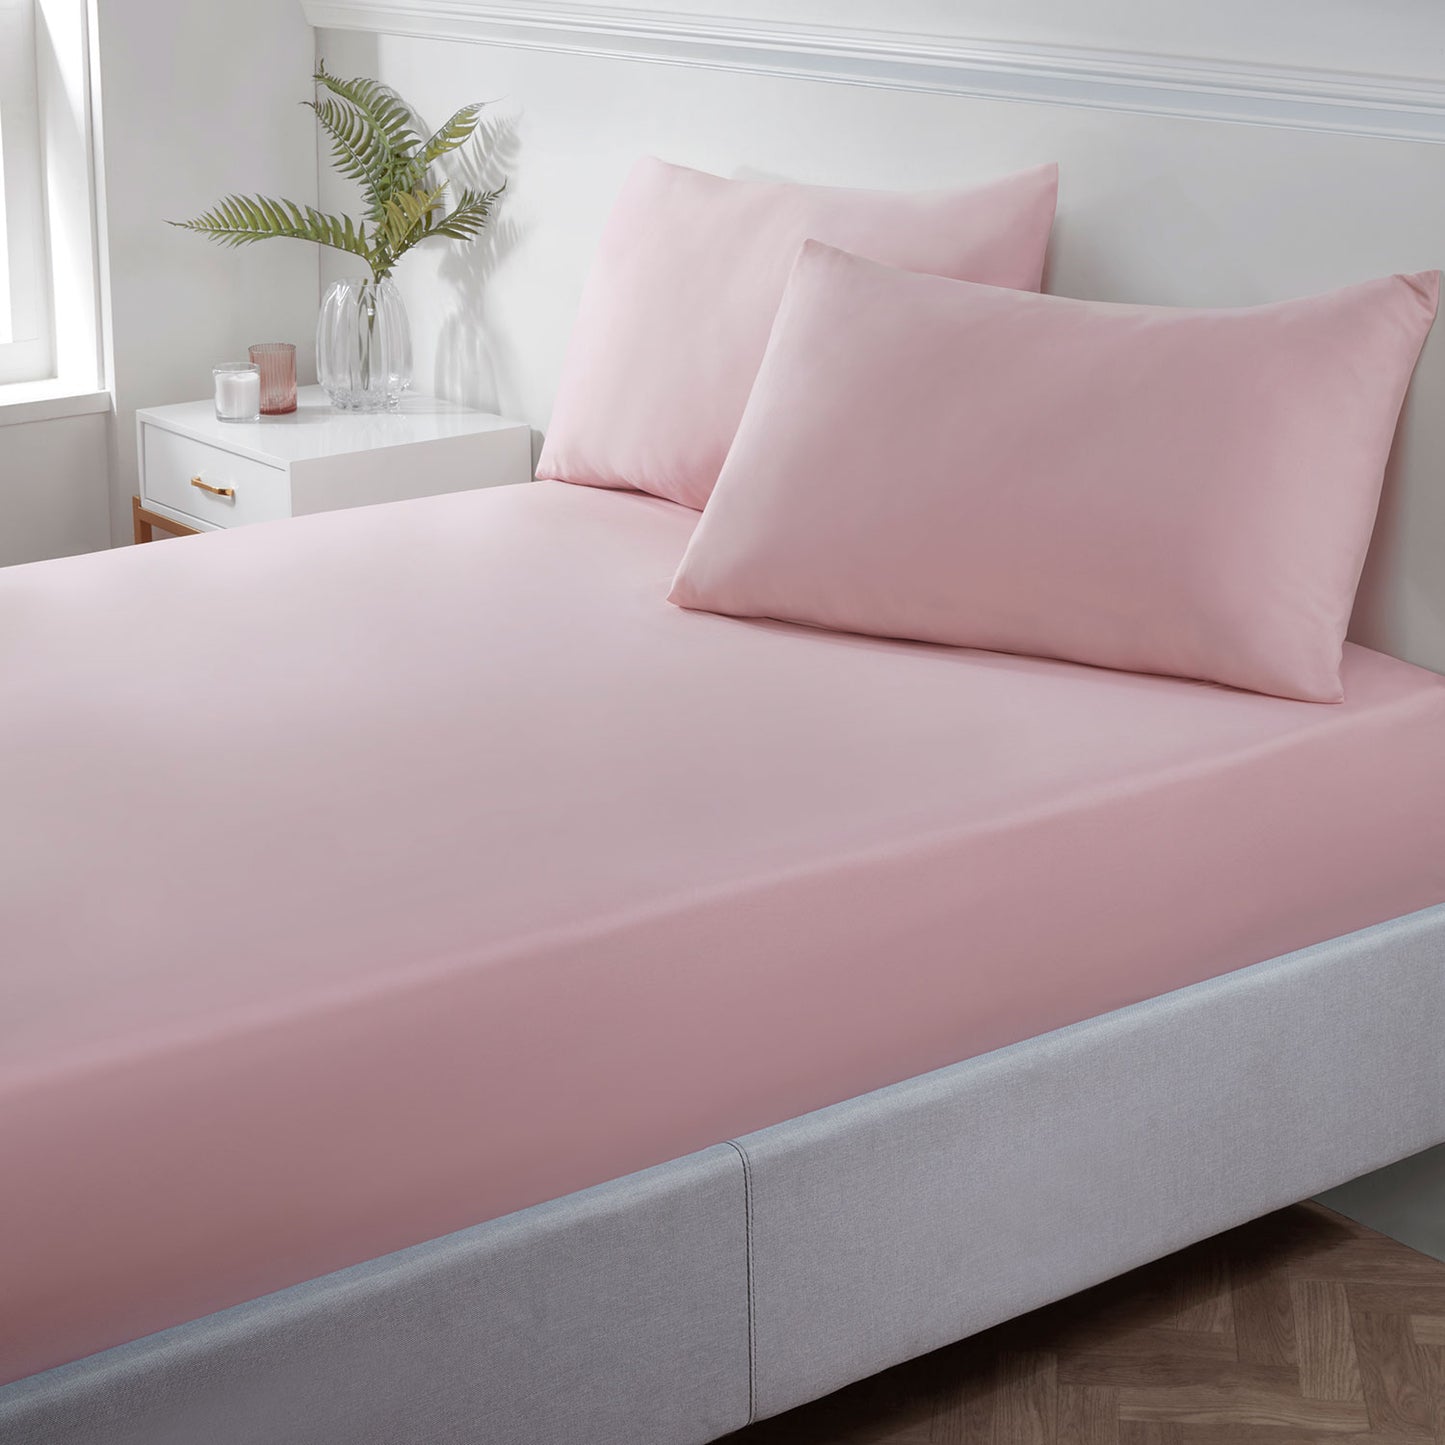 Blush Pink Super Soft Easycare Standard (25cm) Fitted Sheet